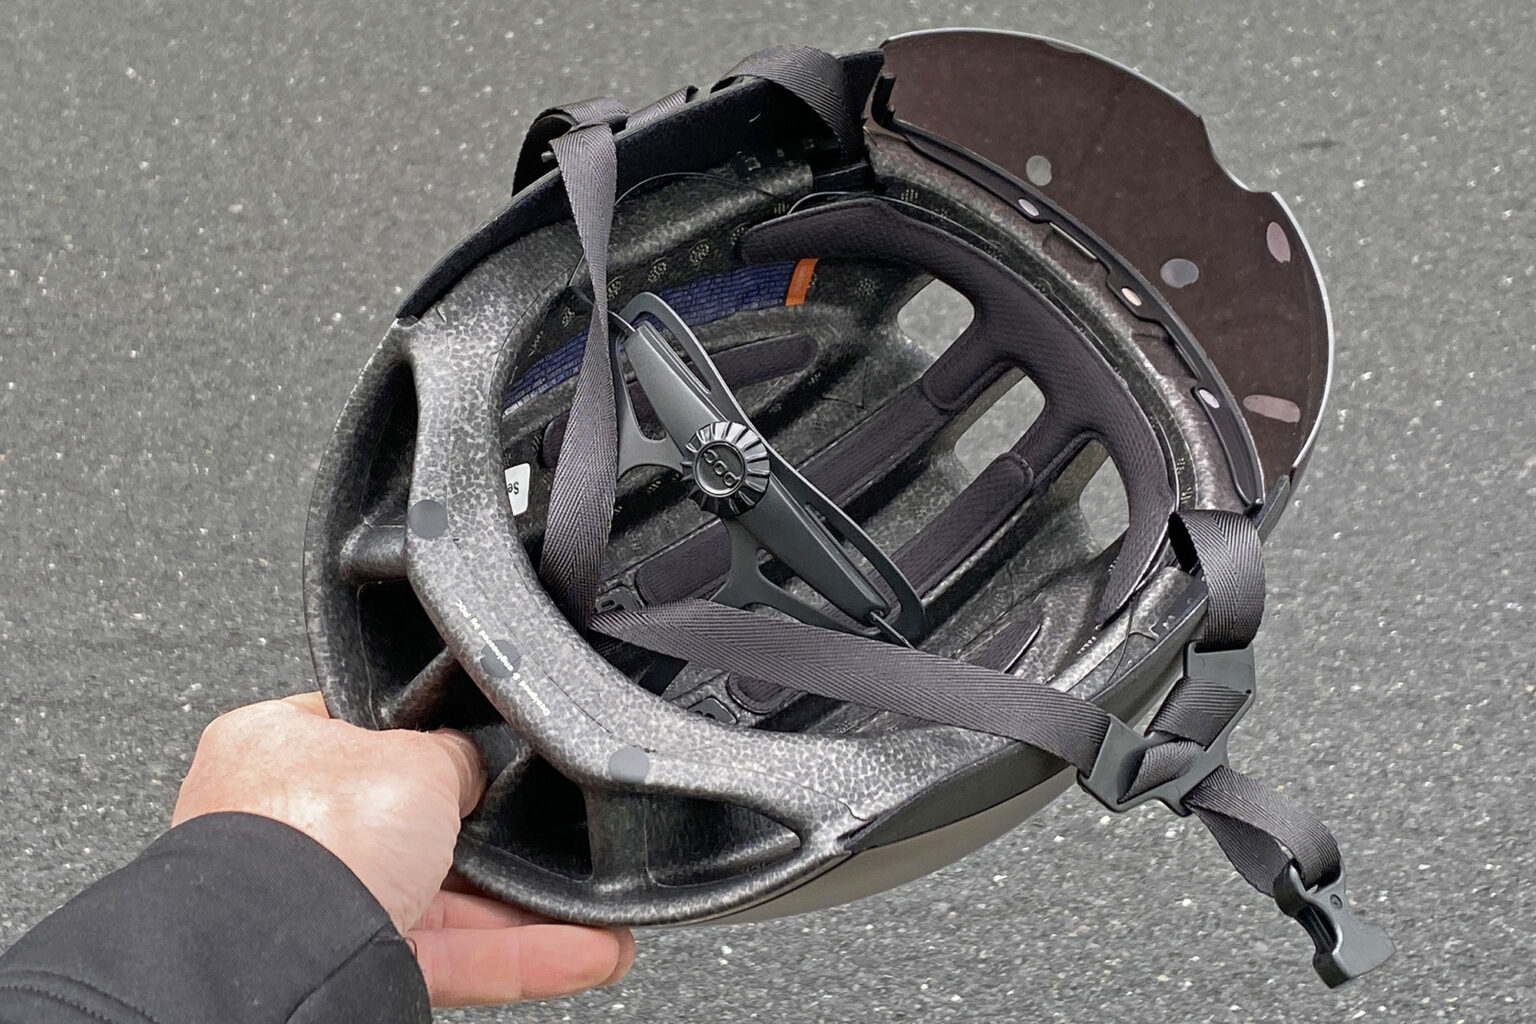 POC Procen Air aero road race helmet Review, inside details